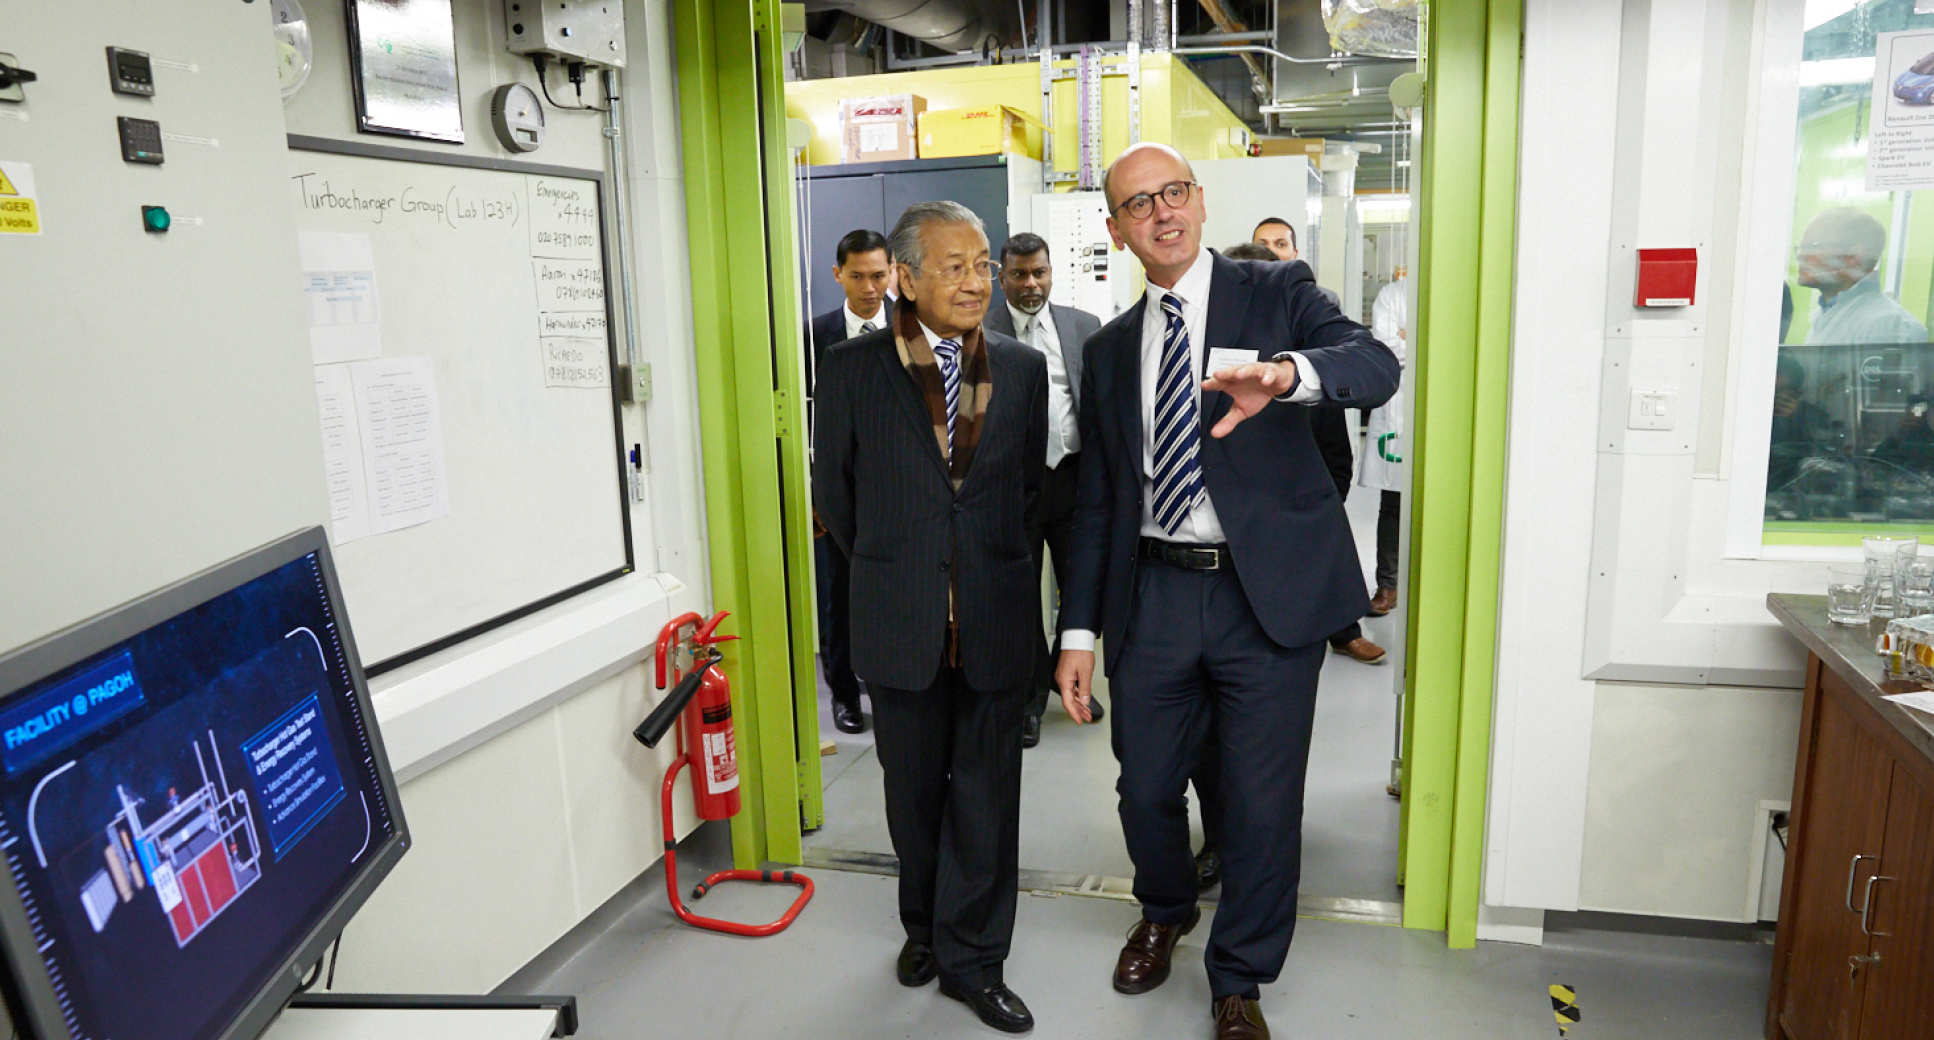 The PM visits Professor Ricardo Martinez-Botas’ Turbochargers Group Lab